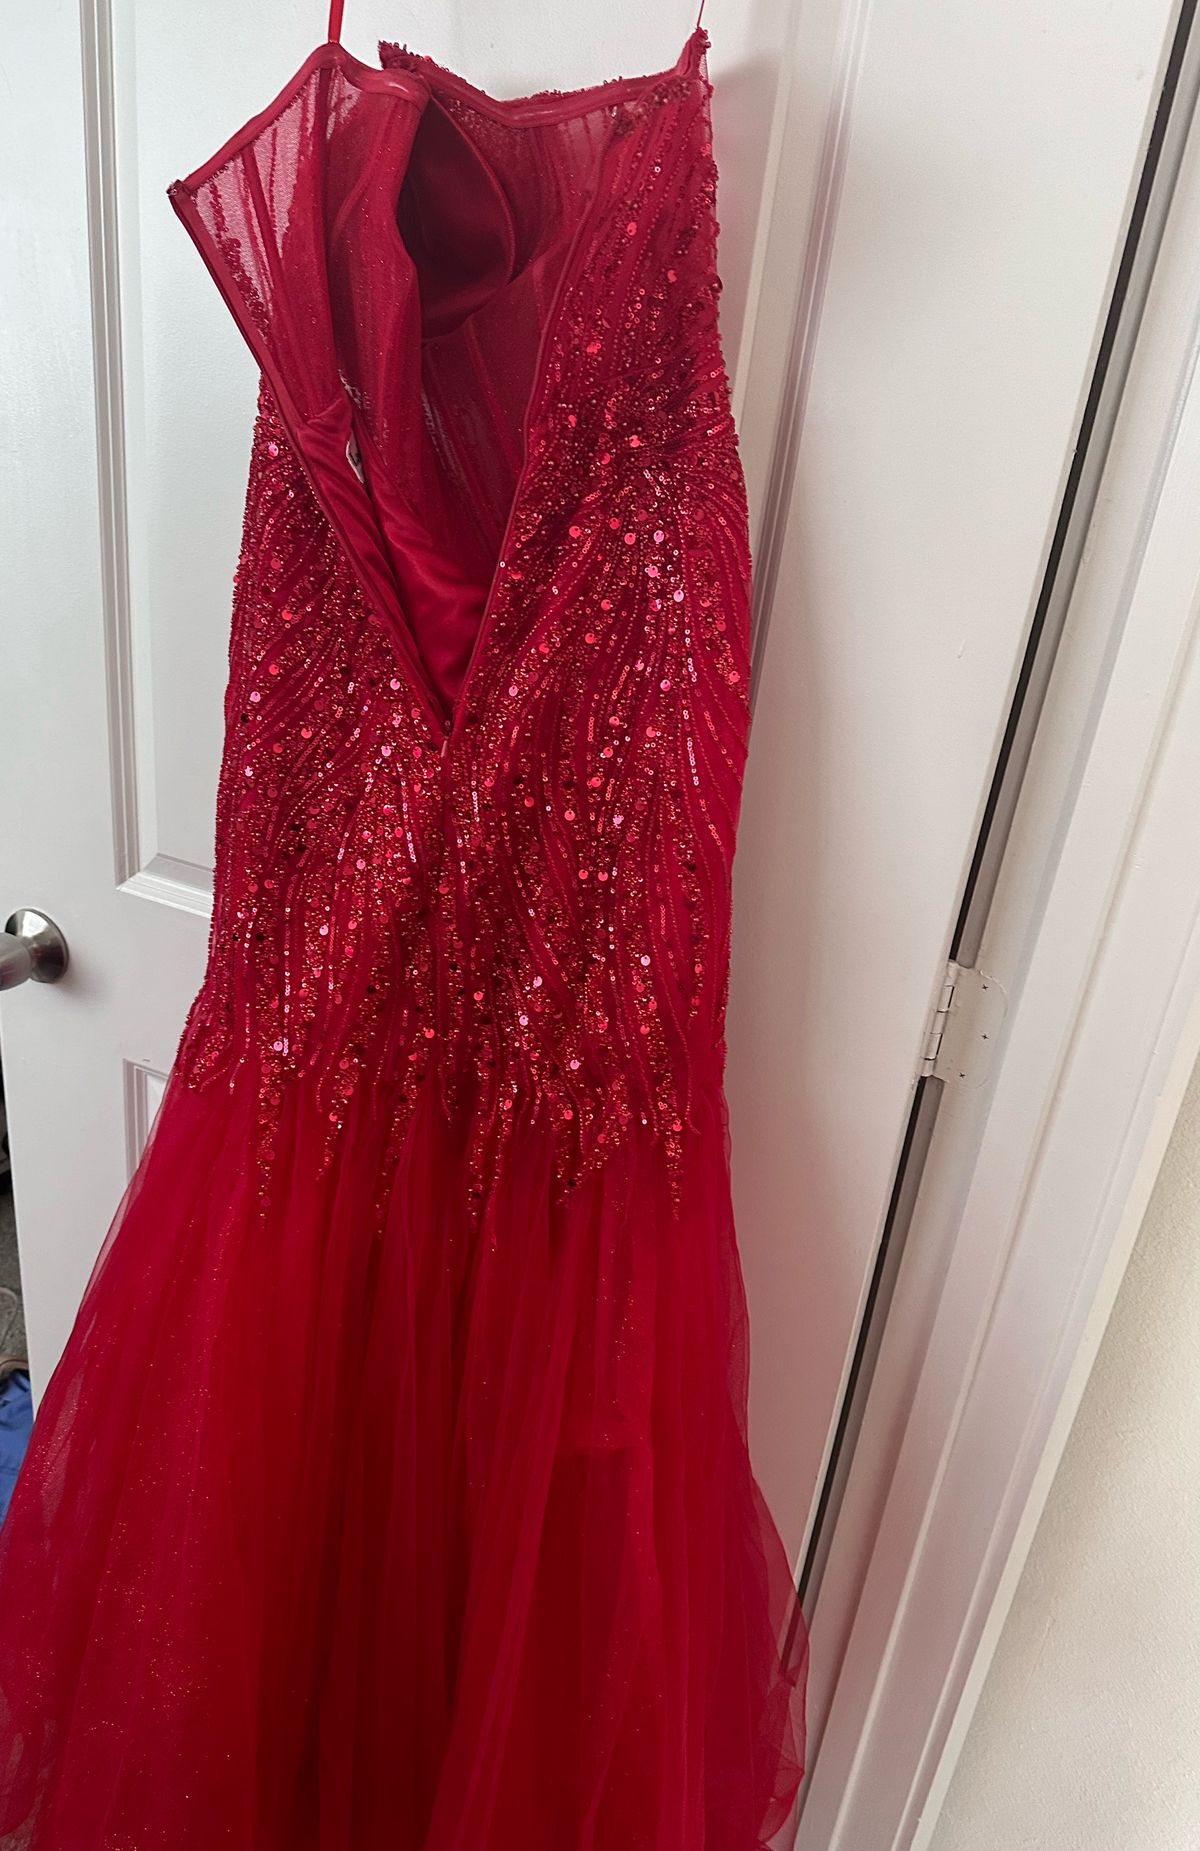 Cinderella Divine Size 8 Prom Strapless Burgundy Red Mermaid Dress on Queenly